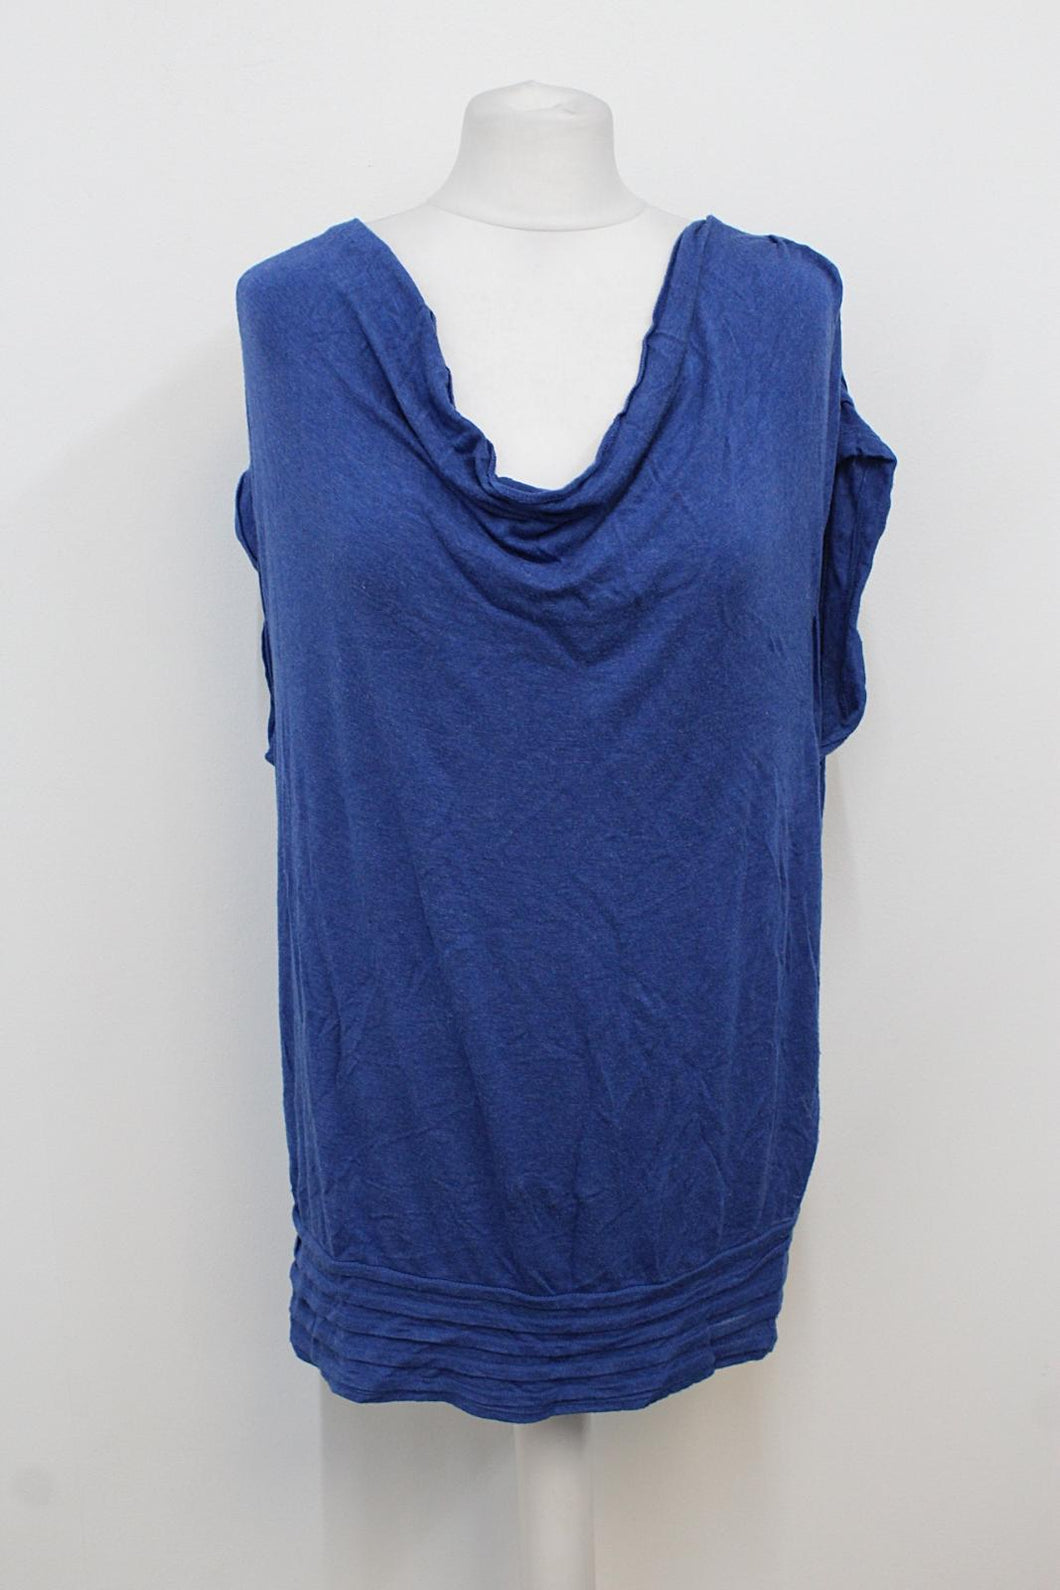 MAX STUDIO Ladies Blue Cowl Neck Stretch Jersey Top Blouse 3701H70 Size L